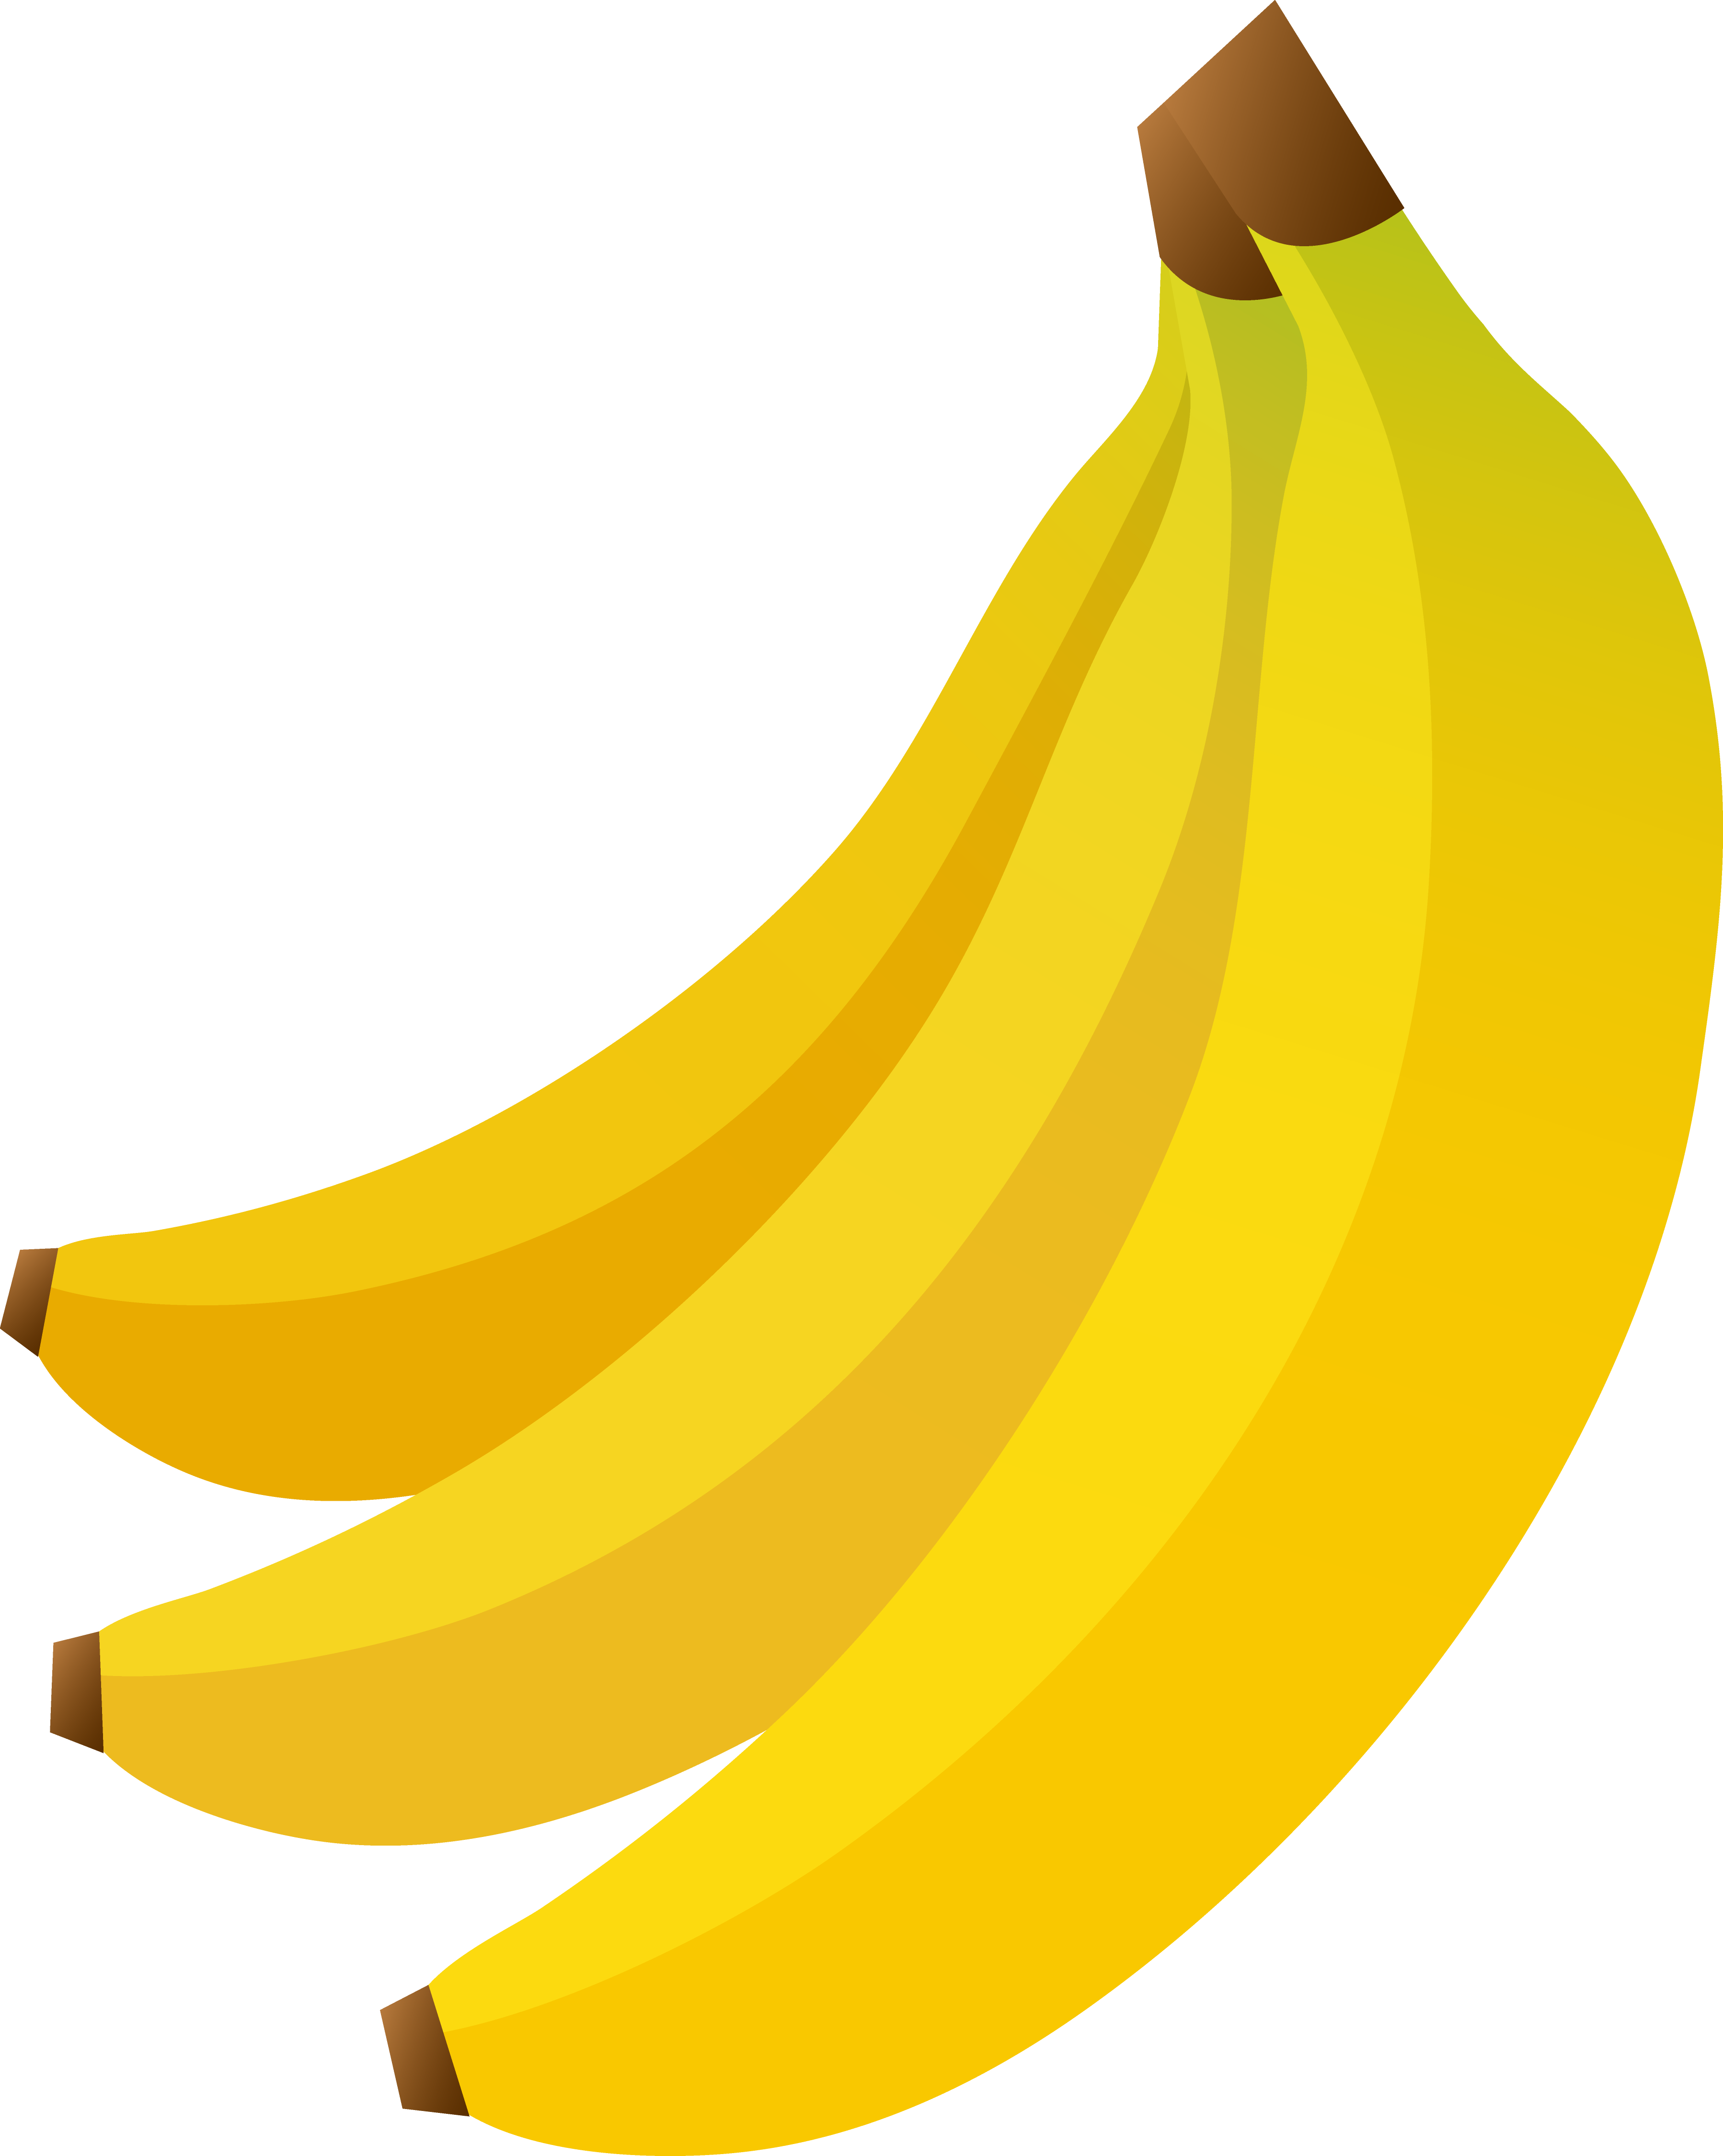 Banana Free Download Png Clipart